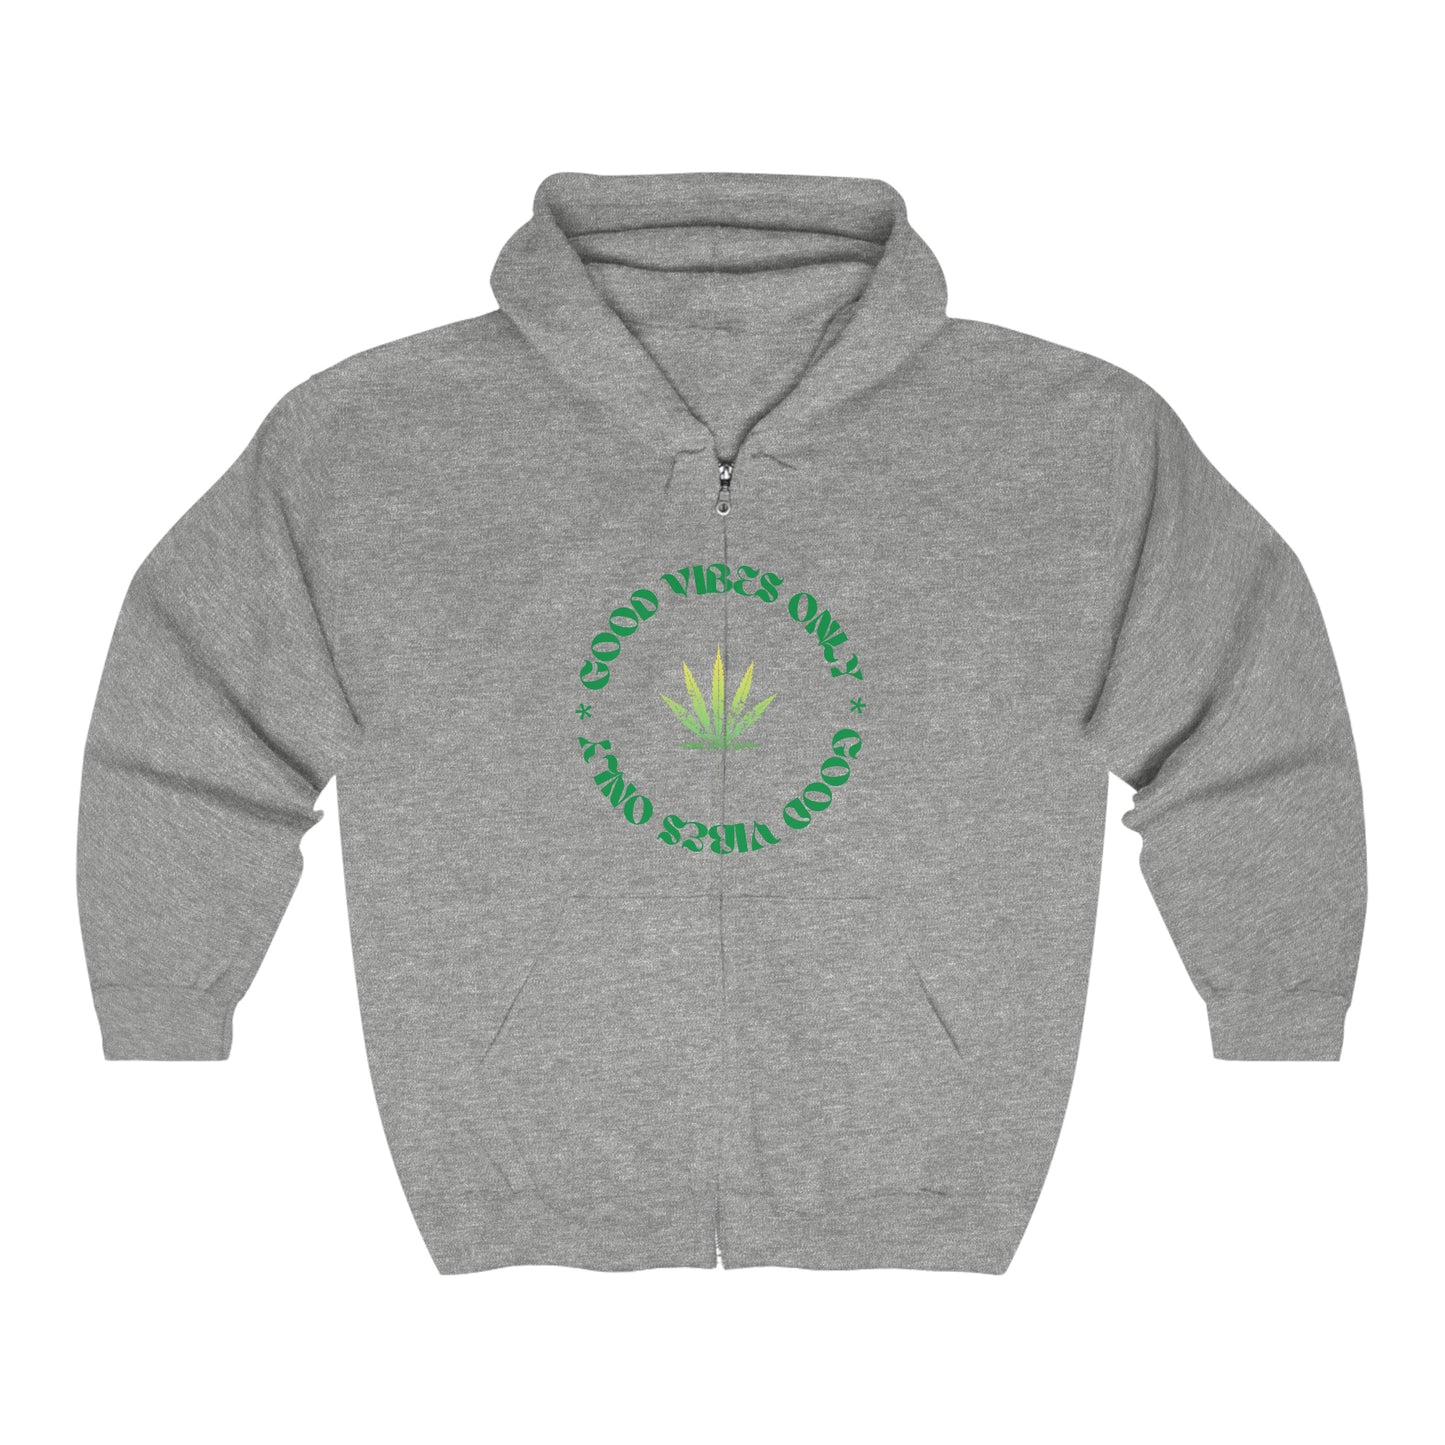 A Good Vibes Only Full Zip Marijuana Hoodie with a green marijuana leaf on it.